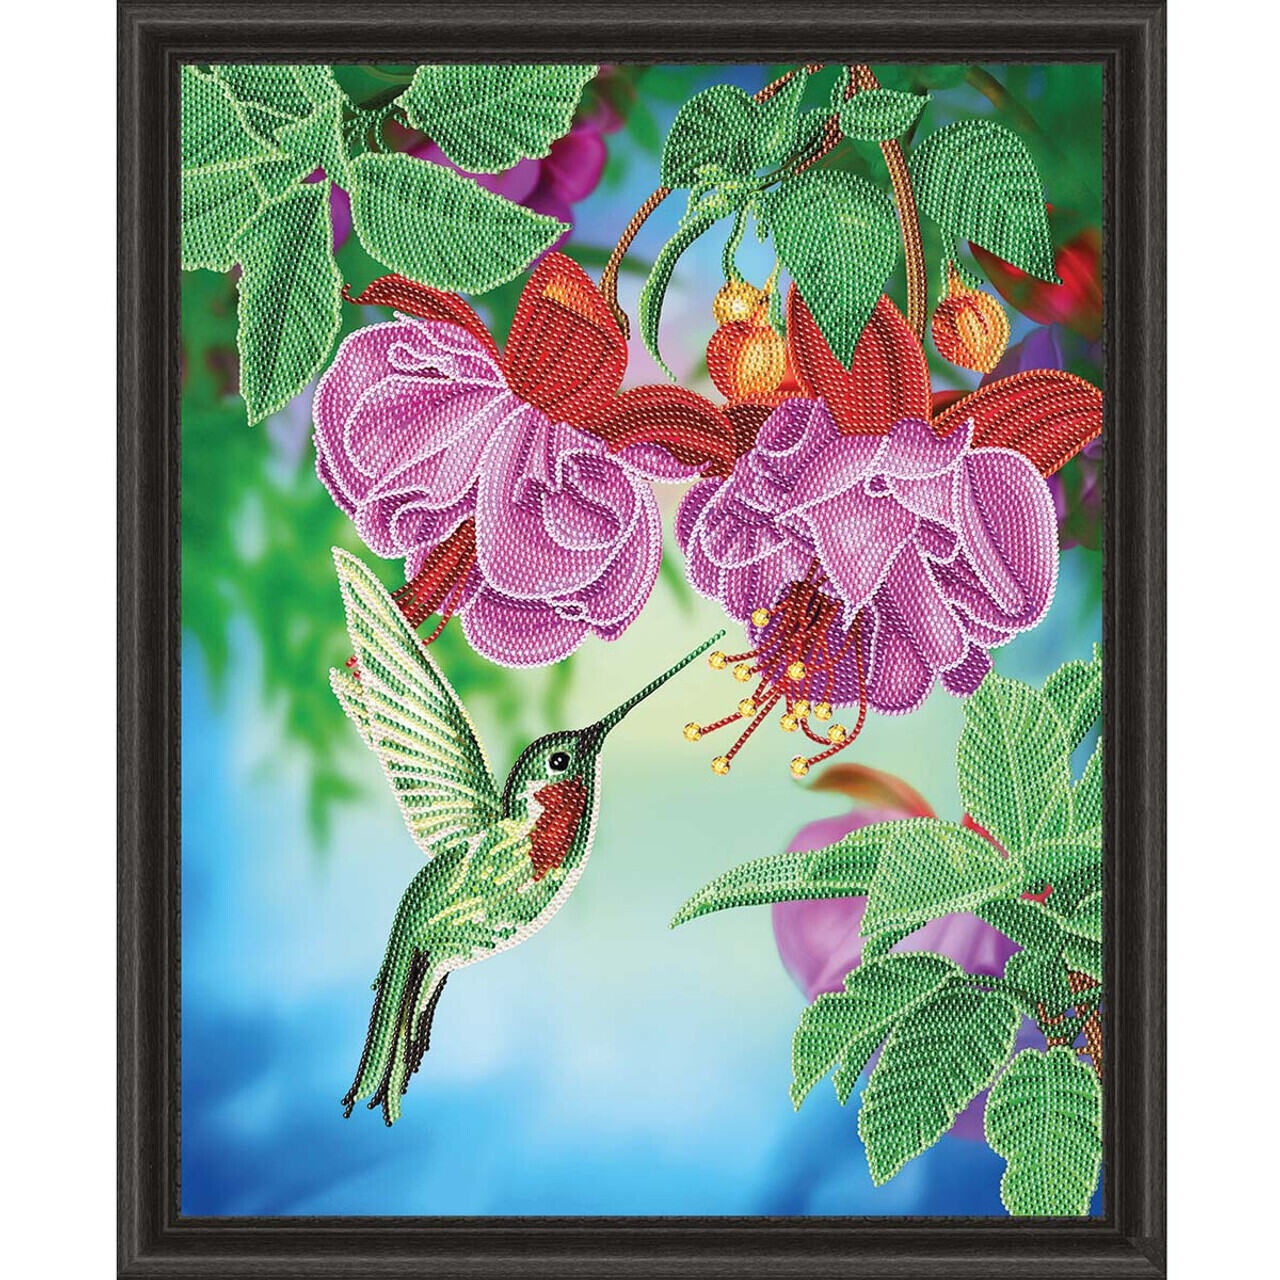 Crystal Art Hummingbird, 40x50cm Diamond Painting Kit